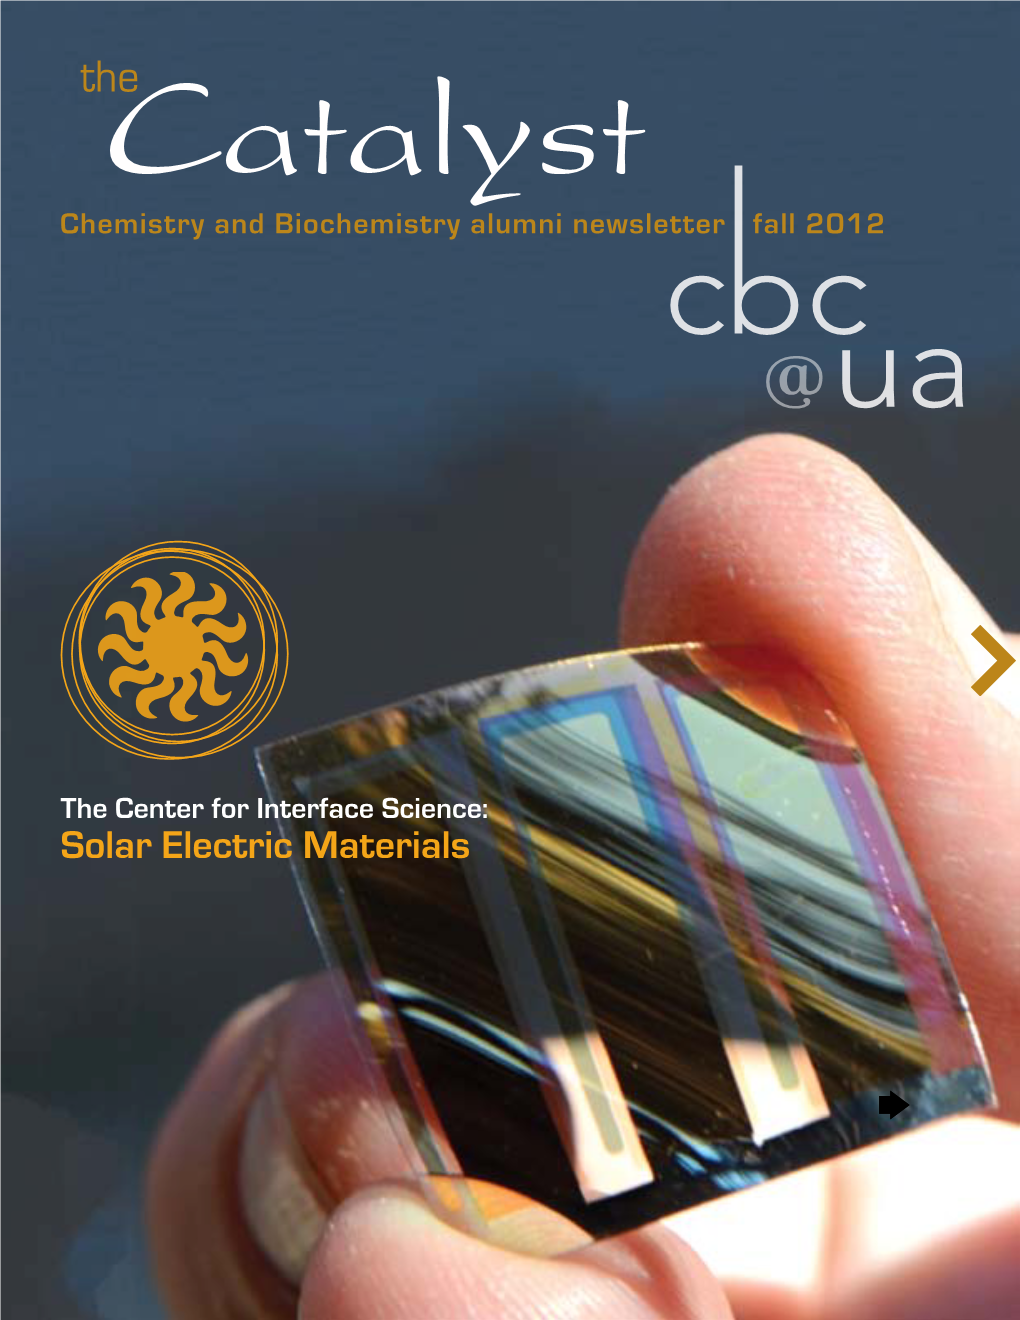 Solar Electric Materials Cbc Alumni Newsletter